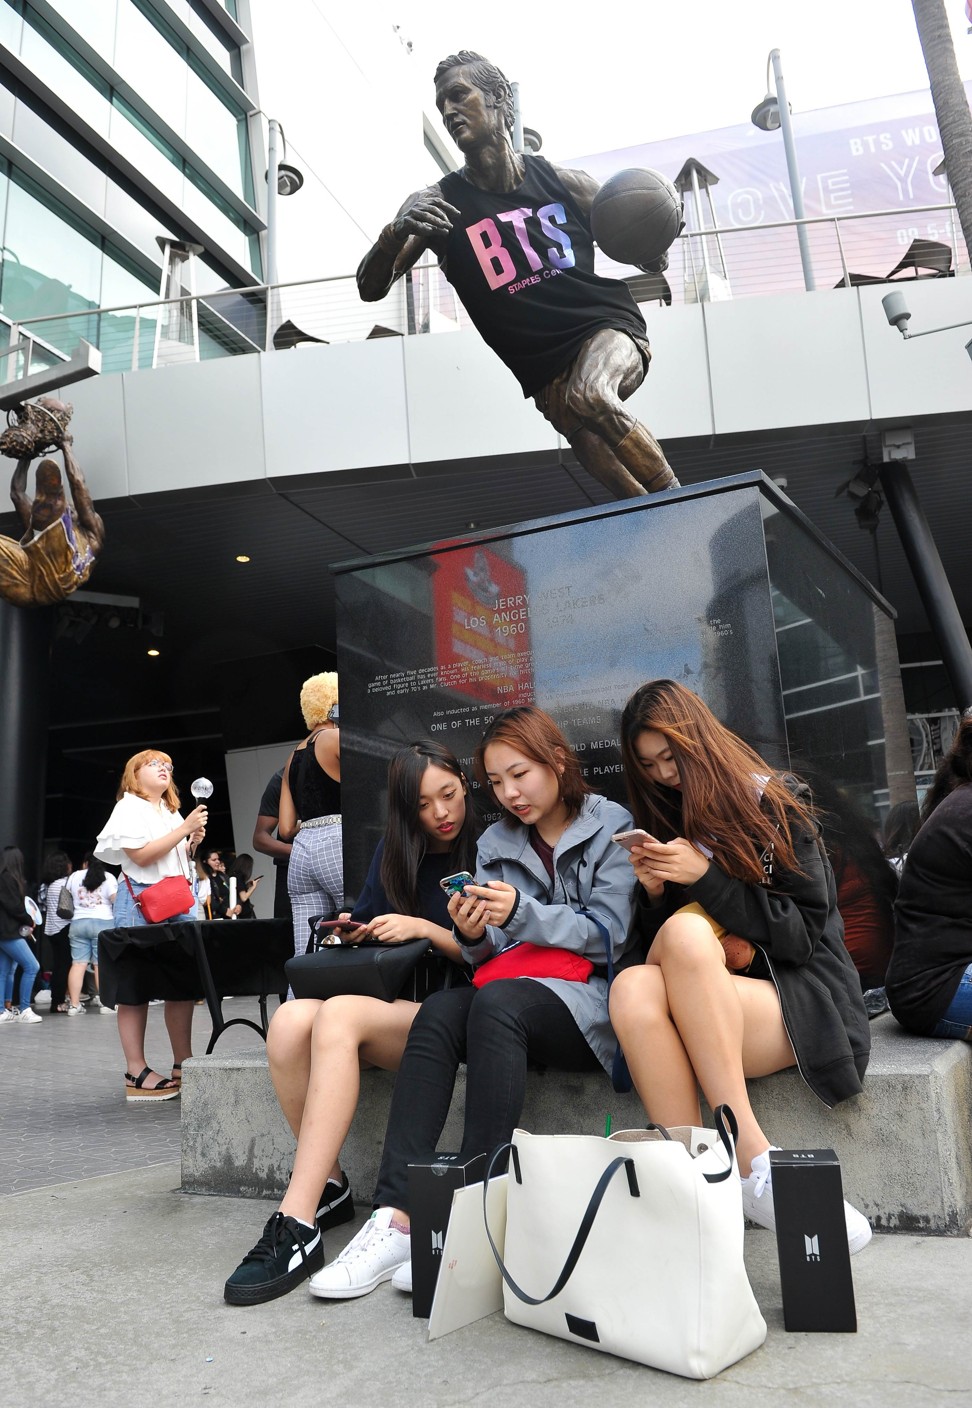 BTS fans Jie Yu, 18, Xiangning Li, 18, and Susu Zhang, 18, before the BTS concert in Los Angeles, California. Photo: Rachel Luna/Getty Images/AFP